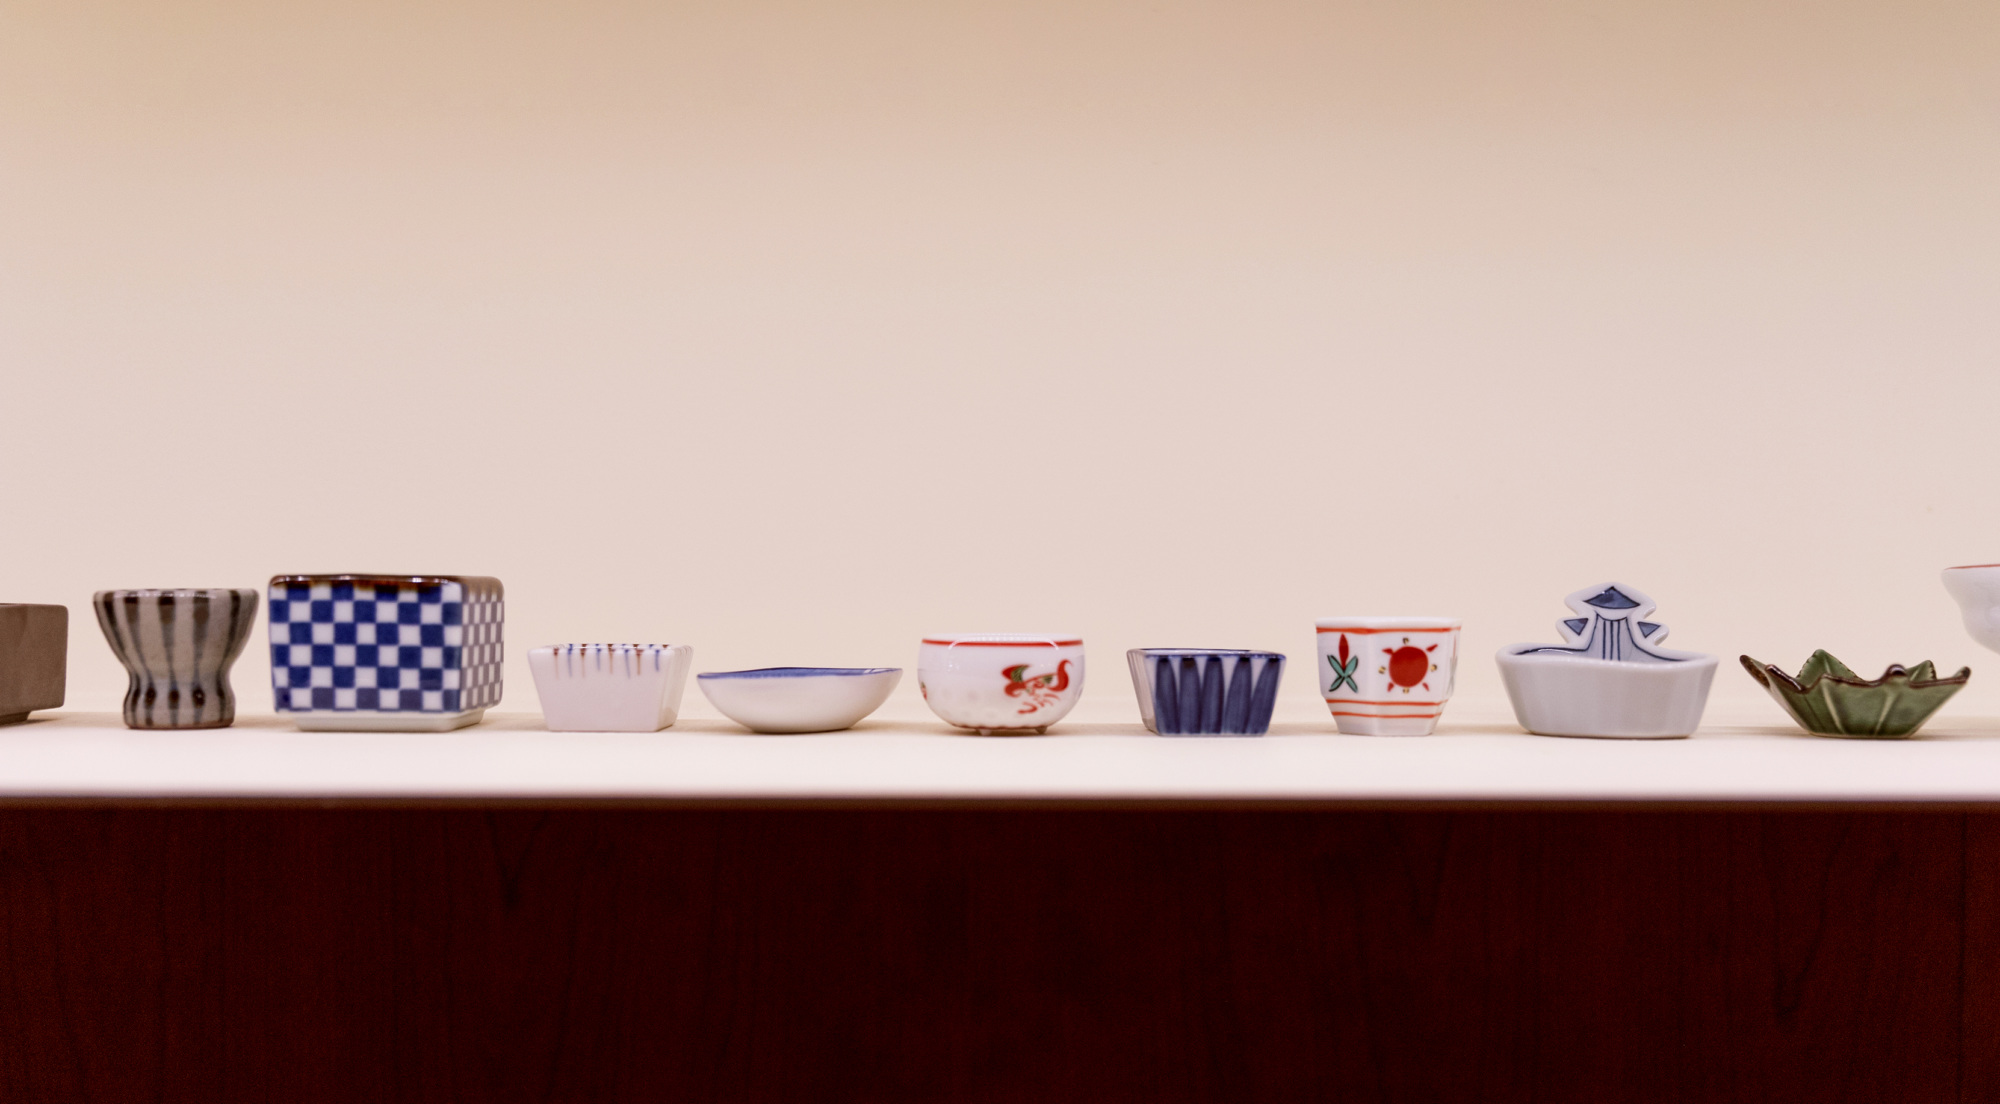 A row of sake cups at Towa